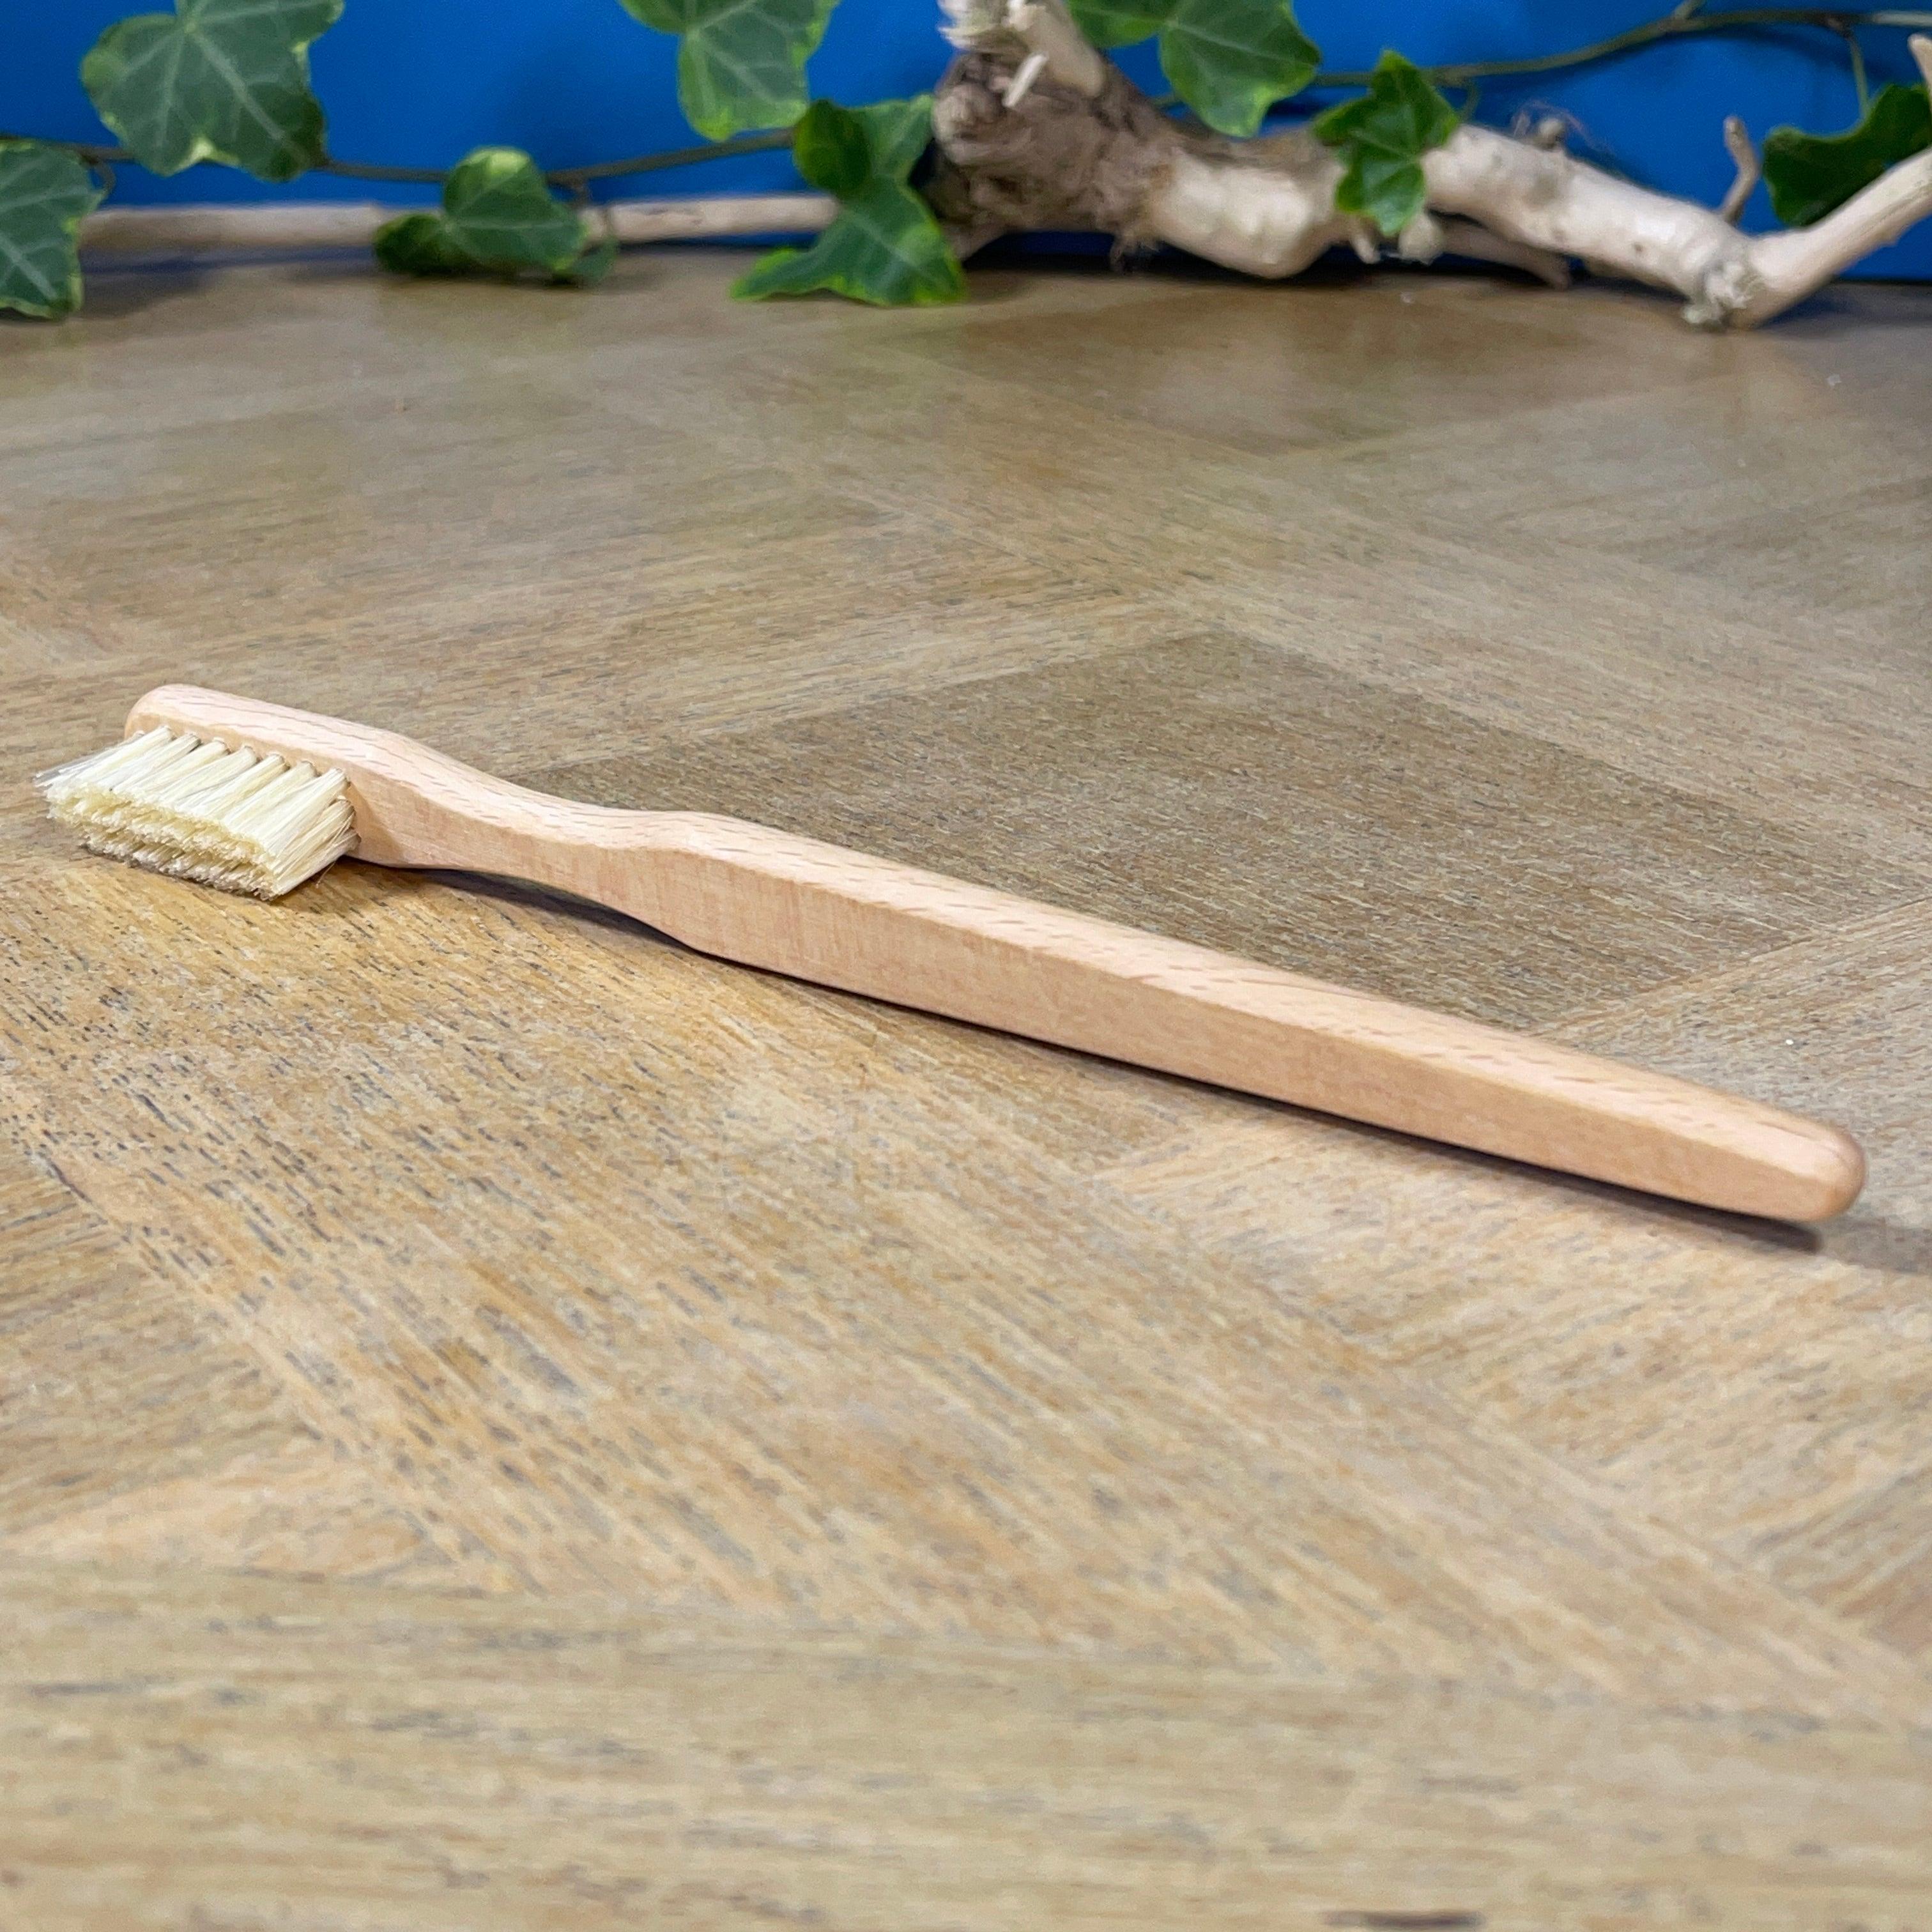 Toothbrush 100% natural bristles and beech wood handle